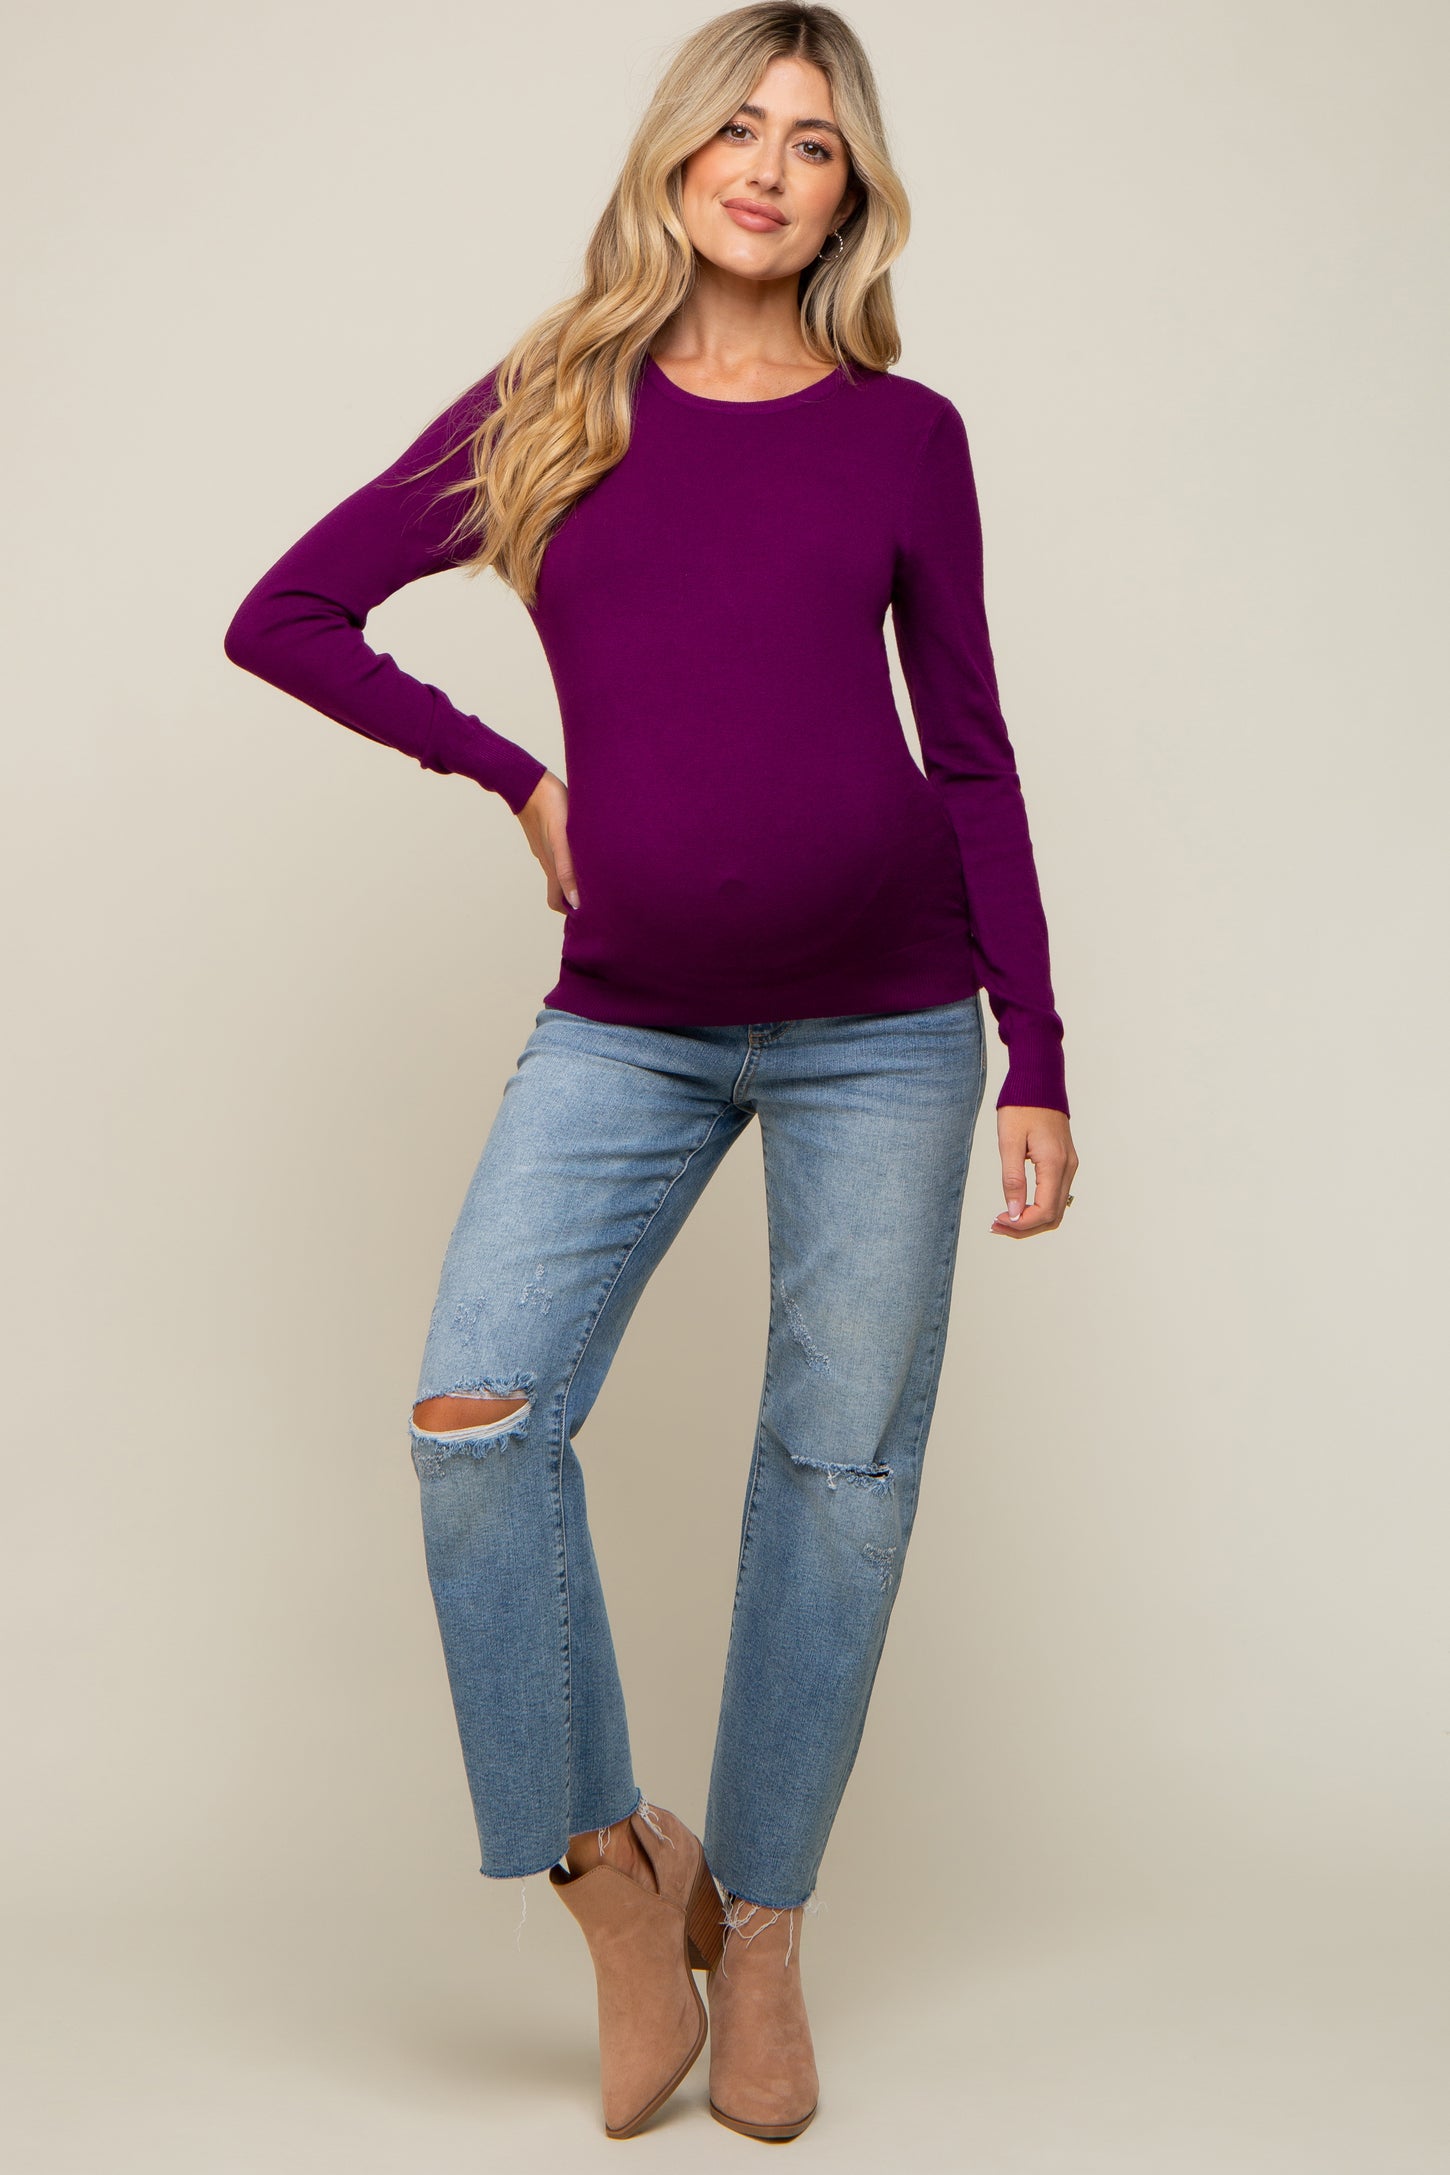 Purple Knit Long Sleeve Maternity Top